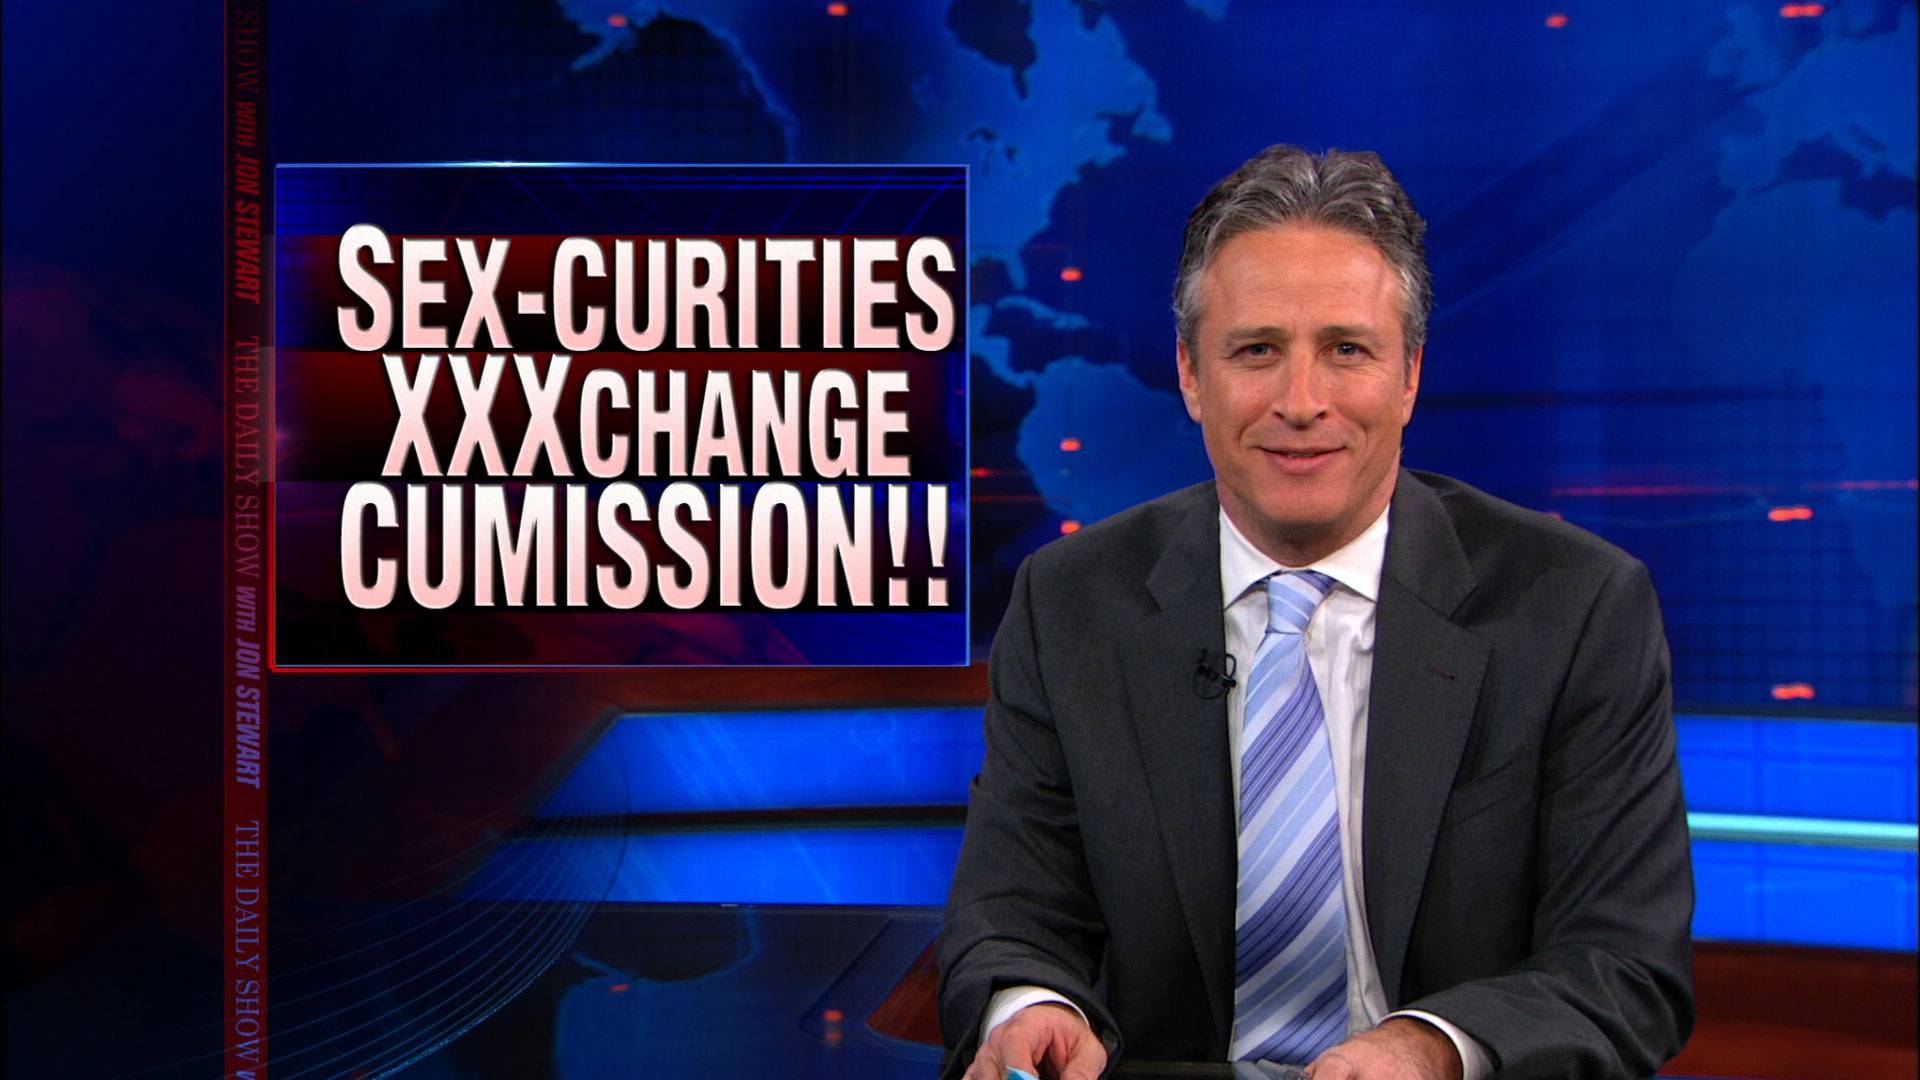 Xxxchange Porn - Sex-curities XXXchange Cumission - The Daily Show with Jon Stewart (Video  Clip) | Comedy Central US